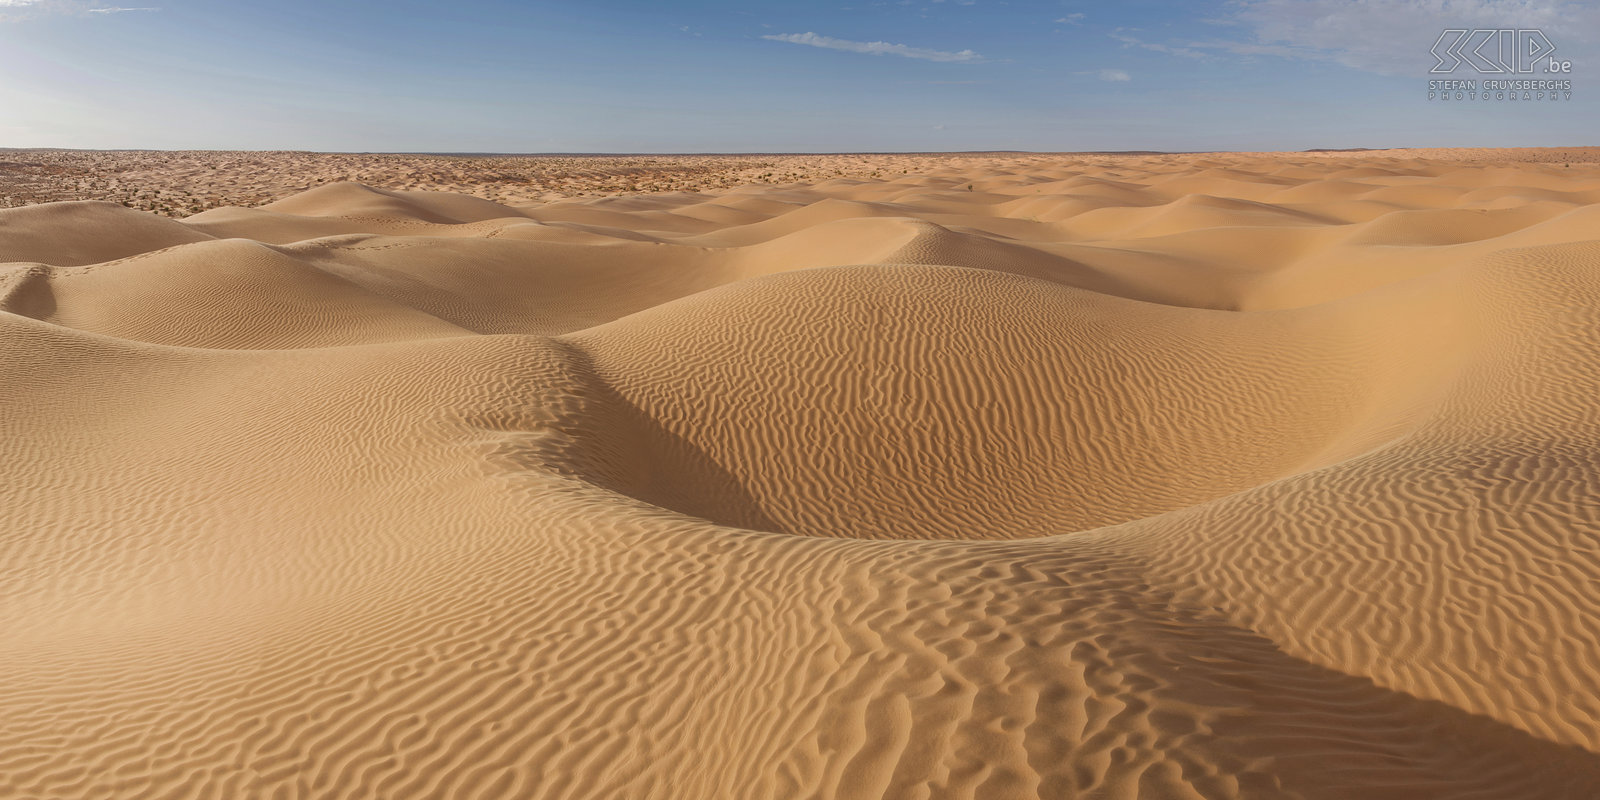 Sanddunes Panaroma photo of the beautiful sand dunes in the Grand Erg Oriental/Great Eastern Sand Sea. Stefan Cruysberghs